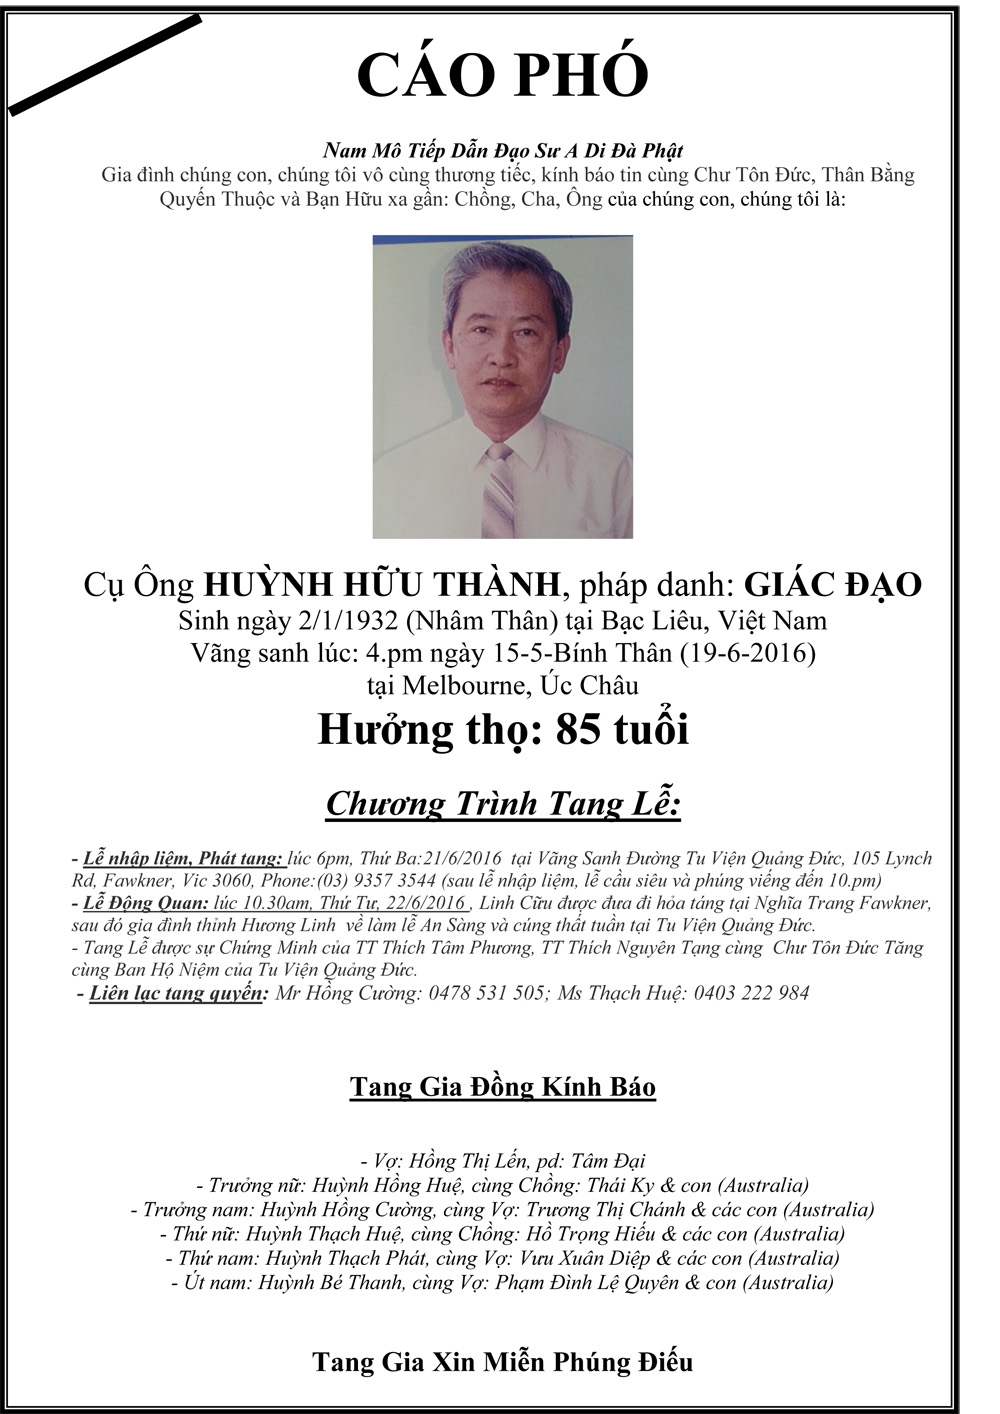 Cao Pho Tang Le Phat tu Giac Dao Huynh Huu Thanh-1